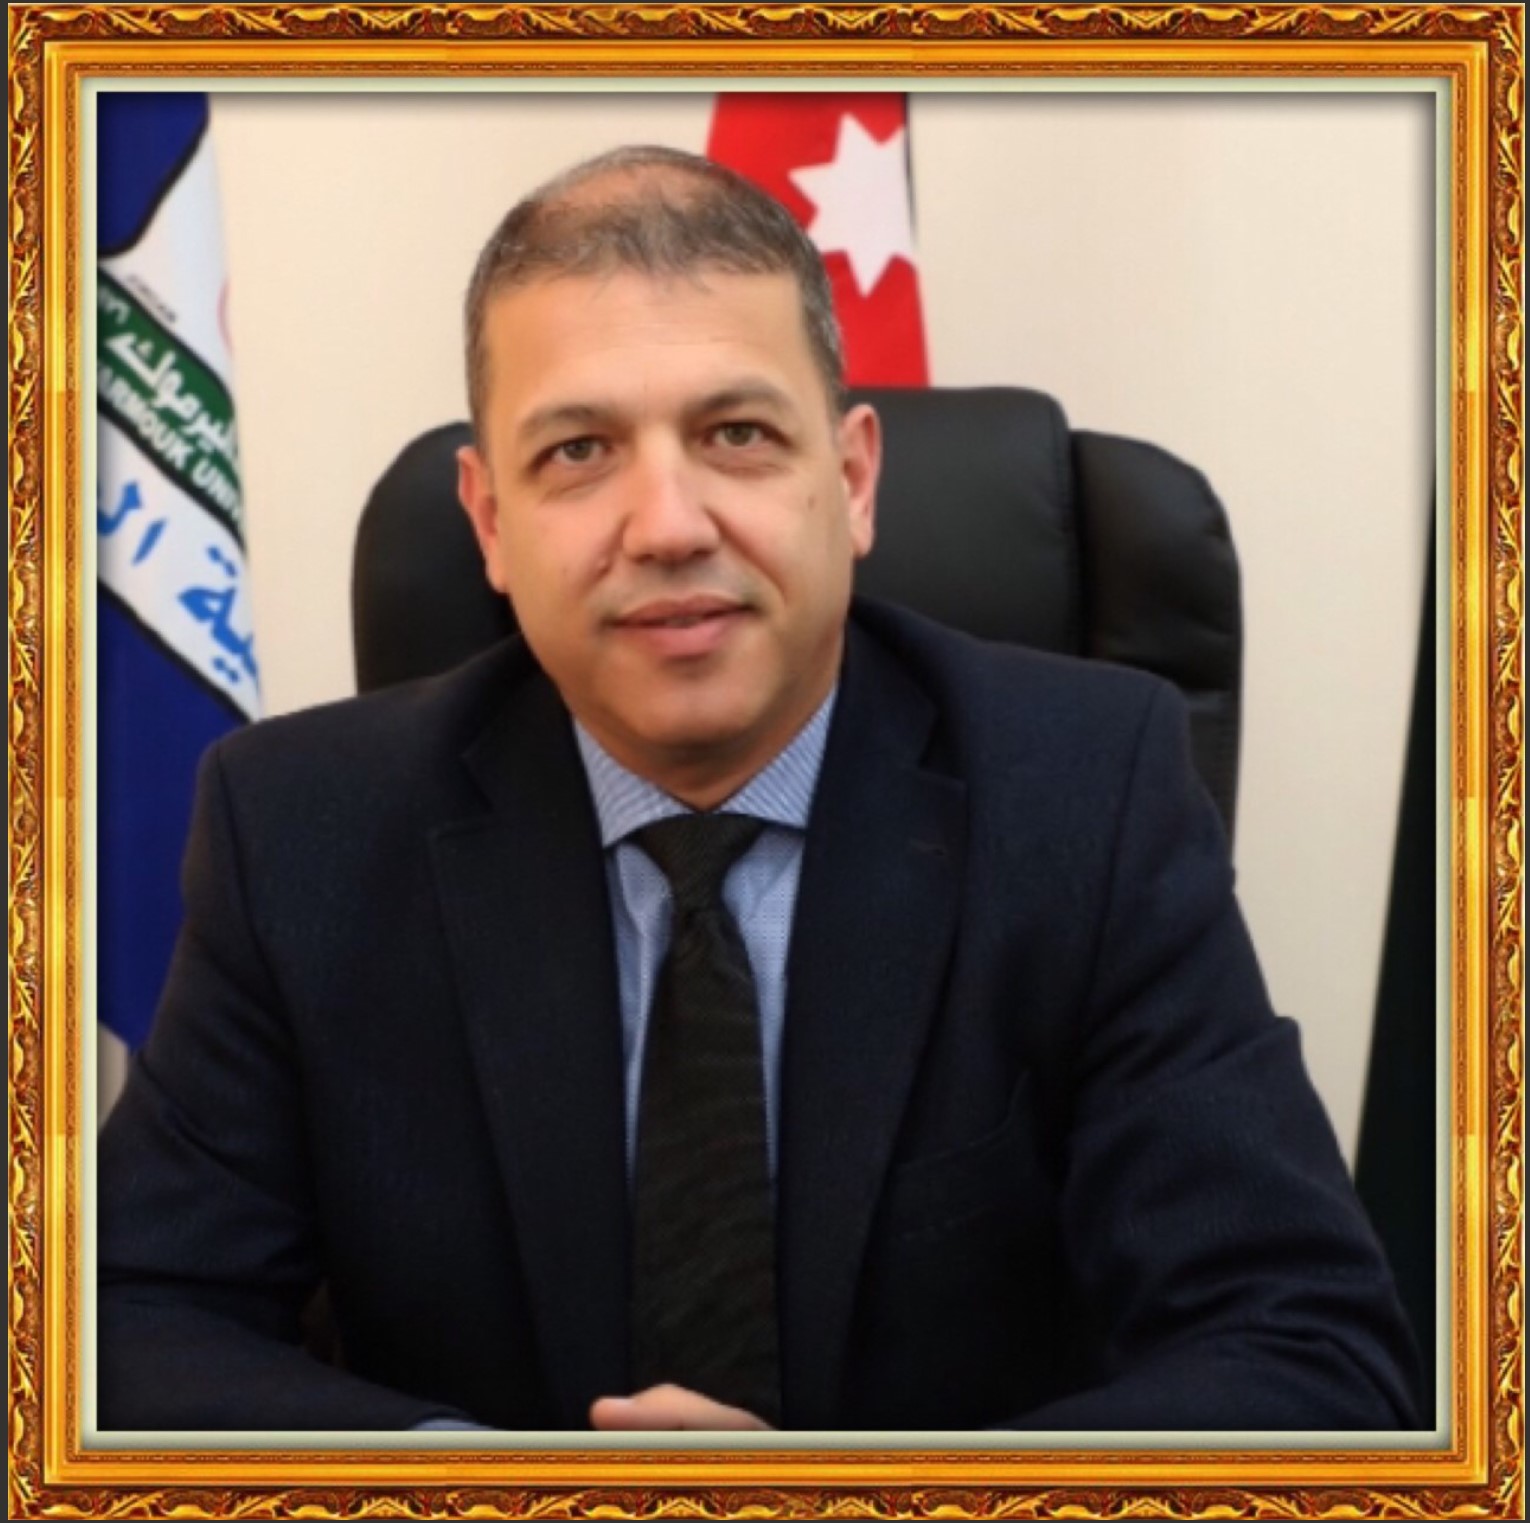 Dr. Wesam Shehadeh